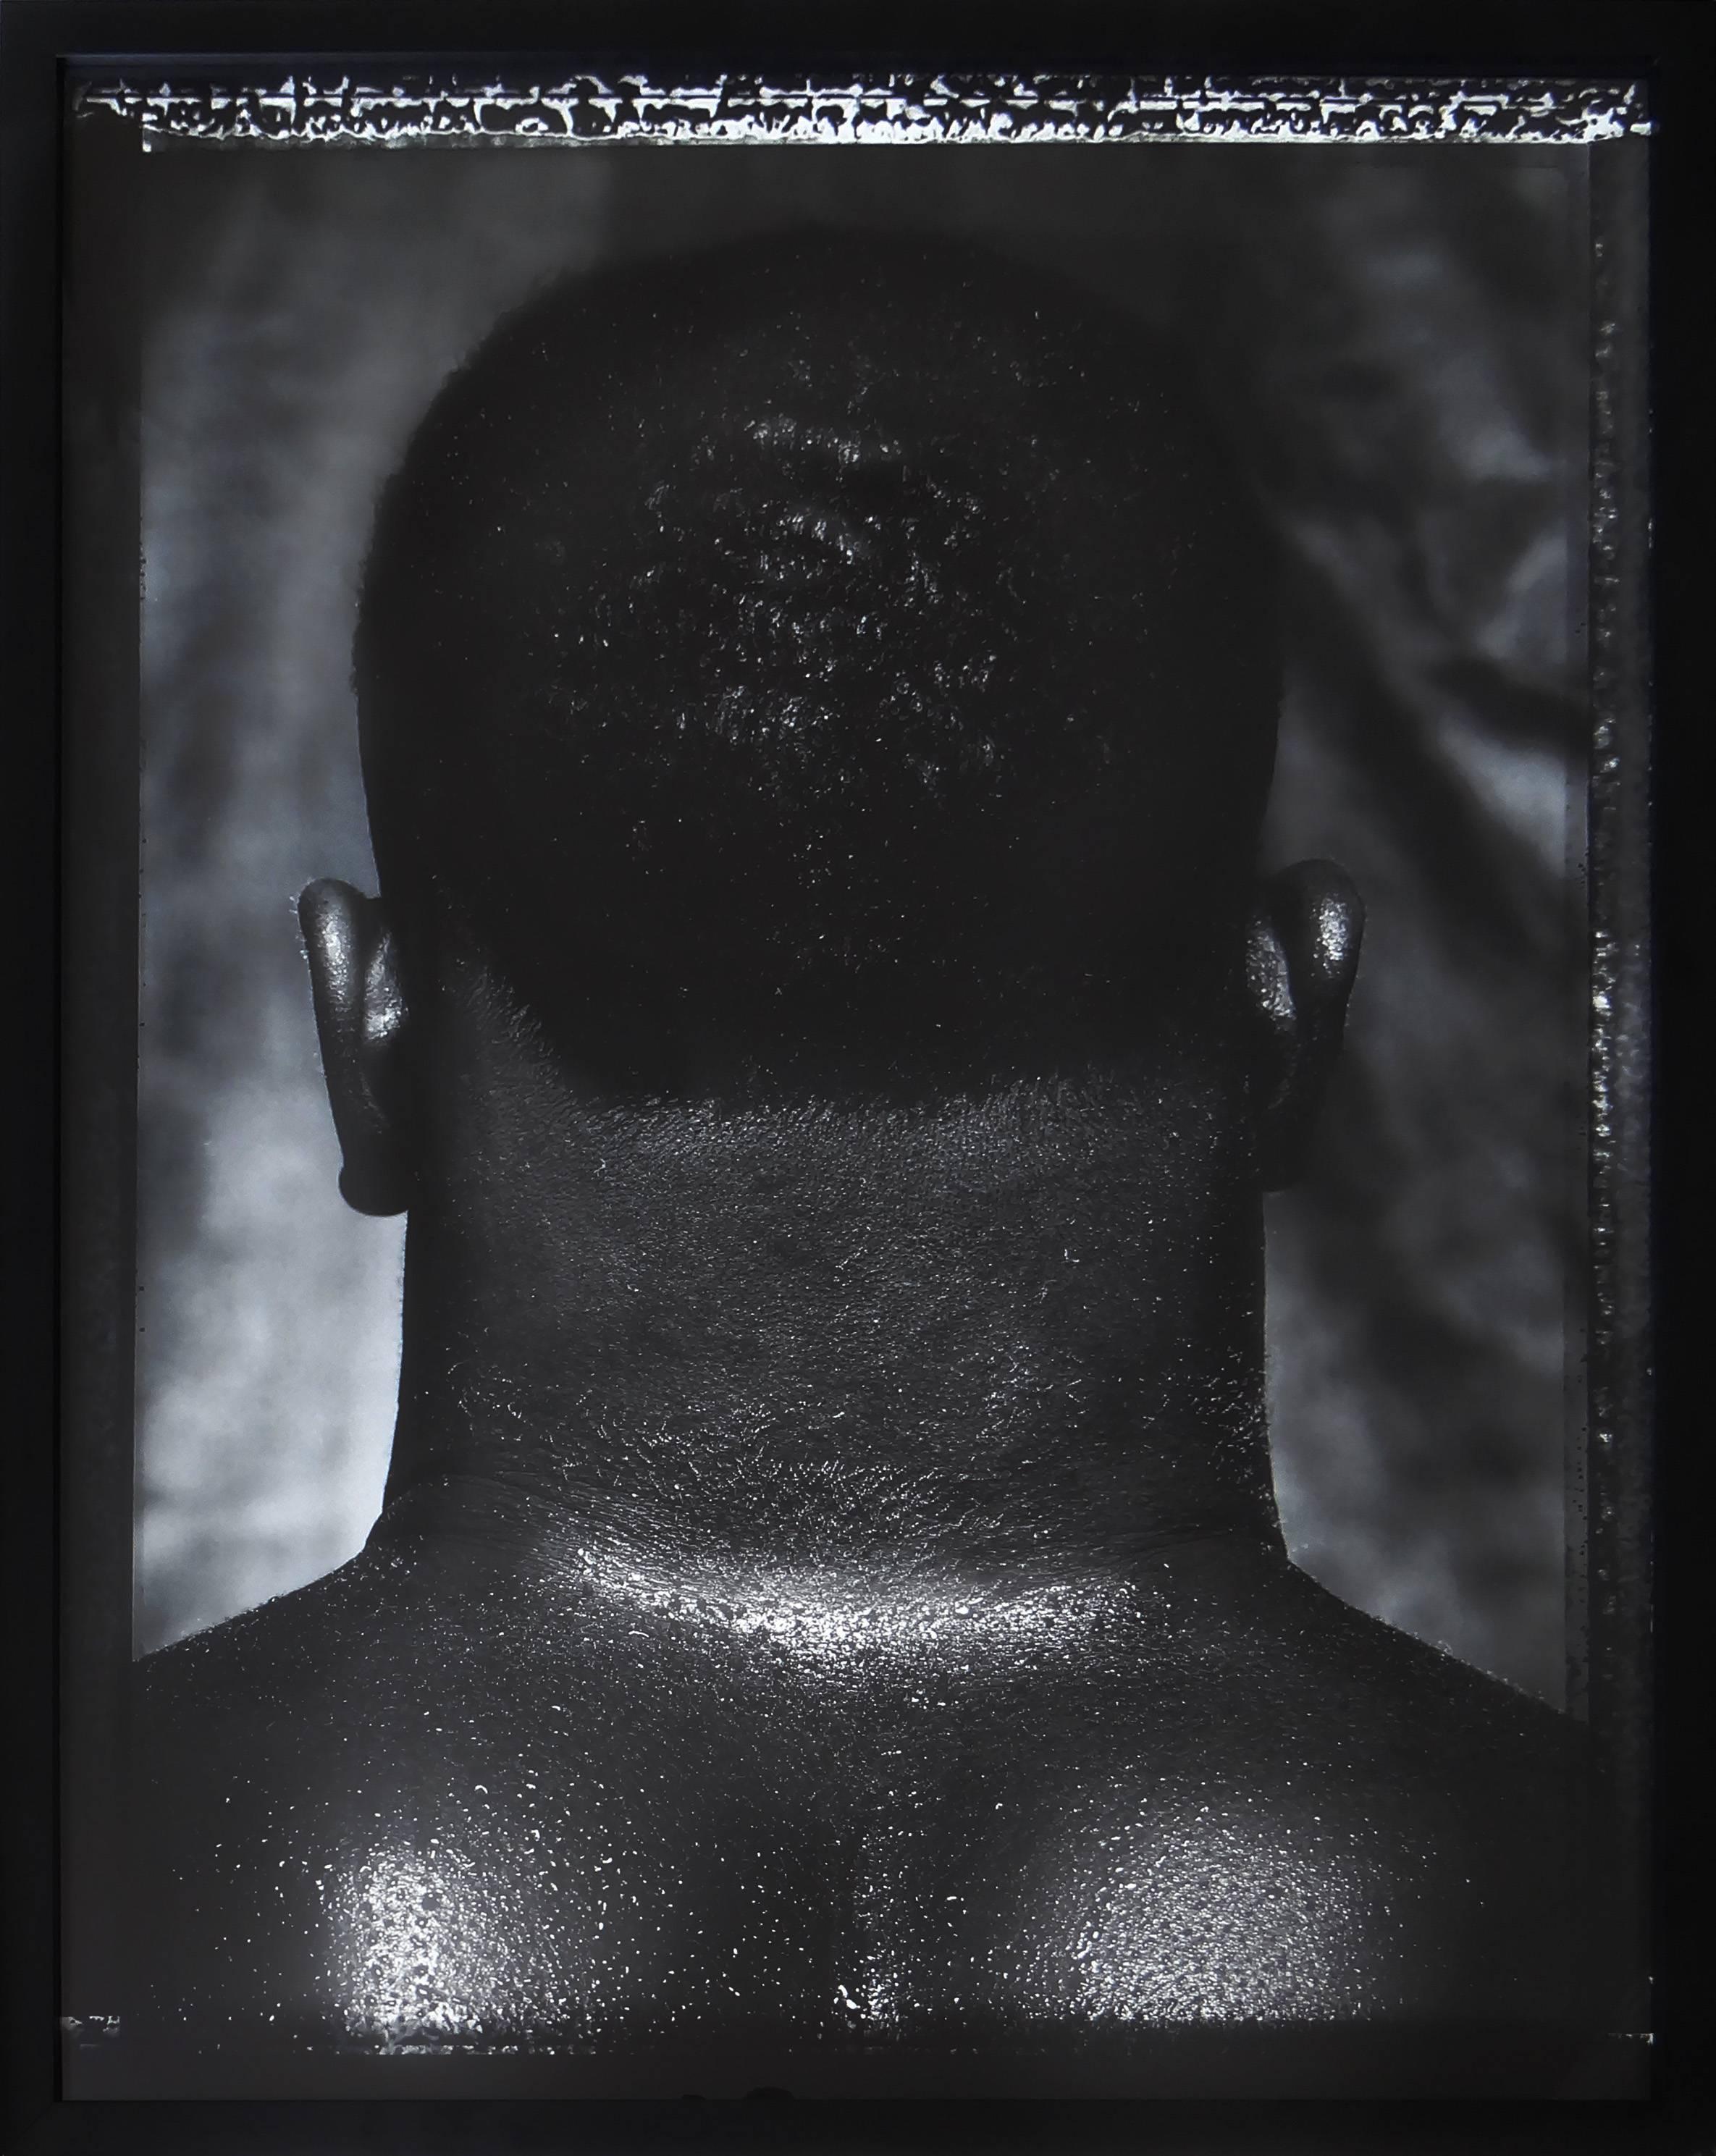 Albert Watson Black and White Photograph - "Mike Tyson, Catskills, New York, 1986", Framed Large Gelatin Silver Print